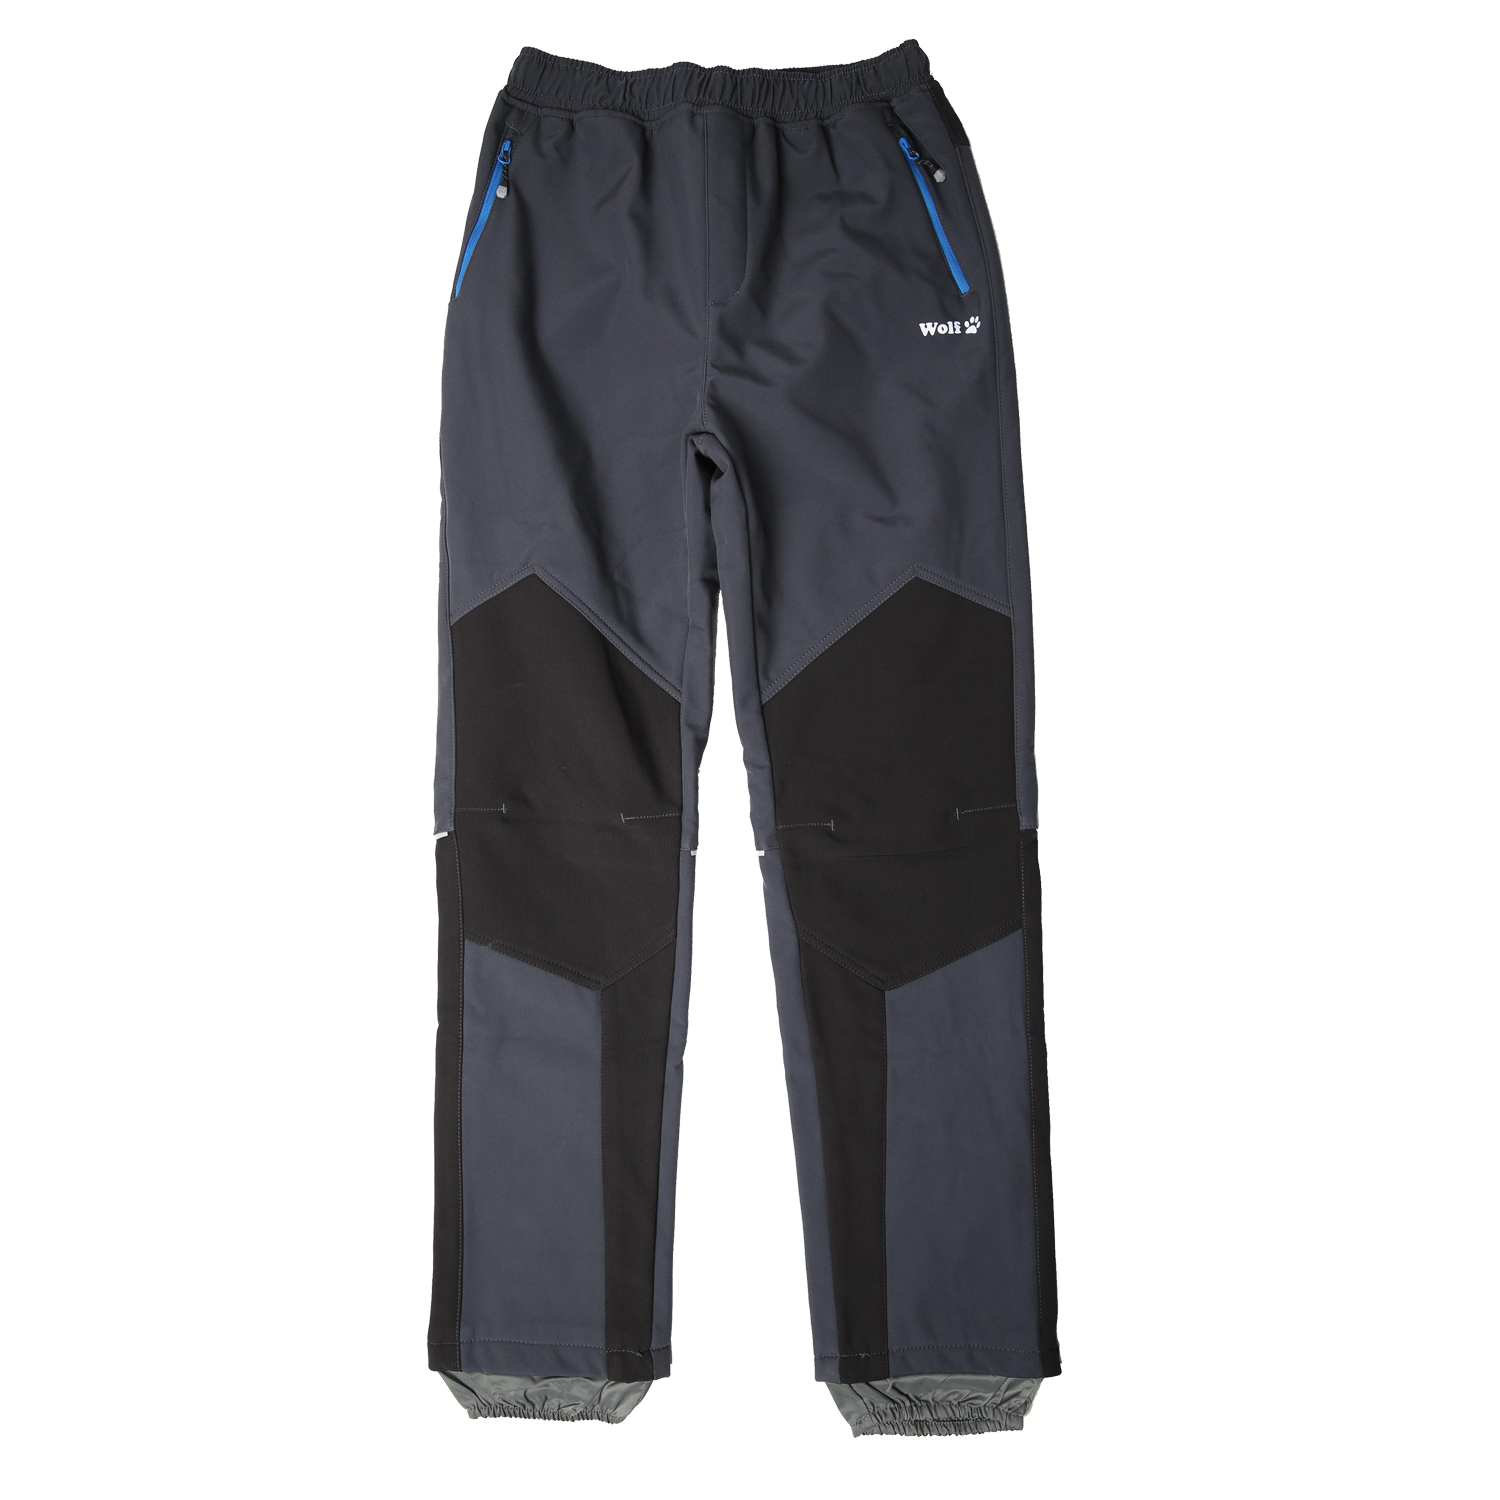 Chlapecké softshellové kalhoty, zateplené - Wolf B2297, šedá/ černá kolena Barva: Šedá, Velikost: 134